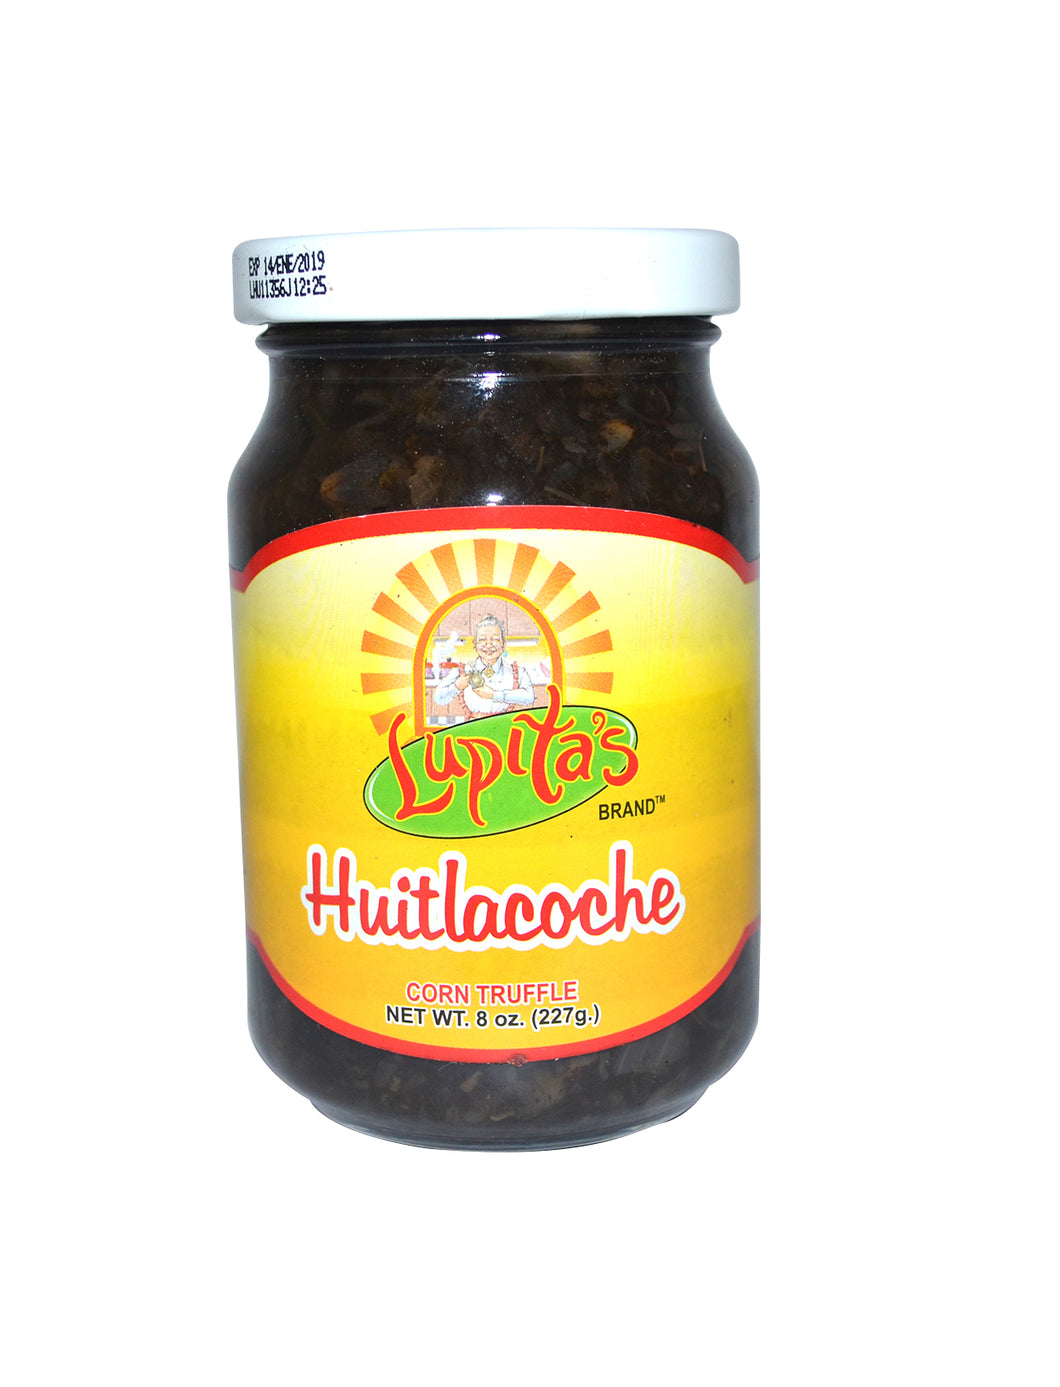 Huitlacoche corn truffle